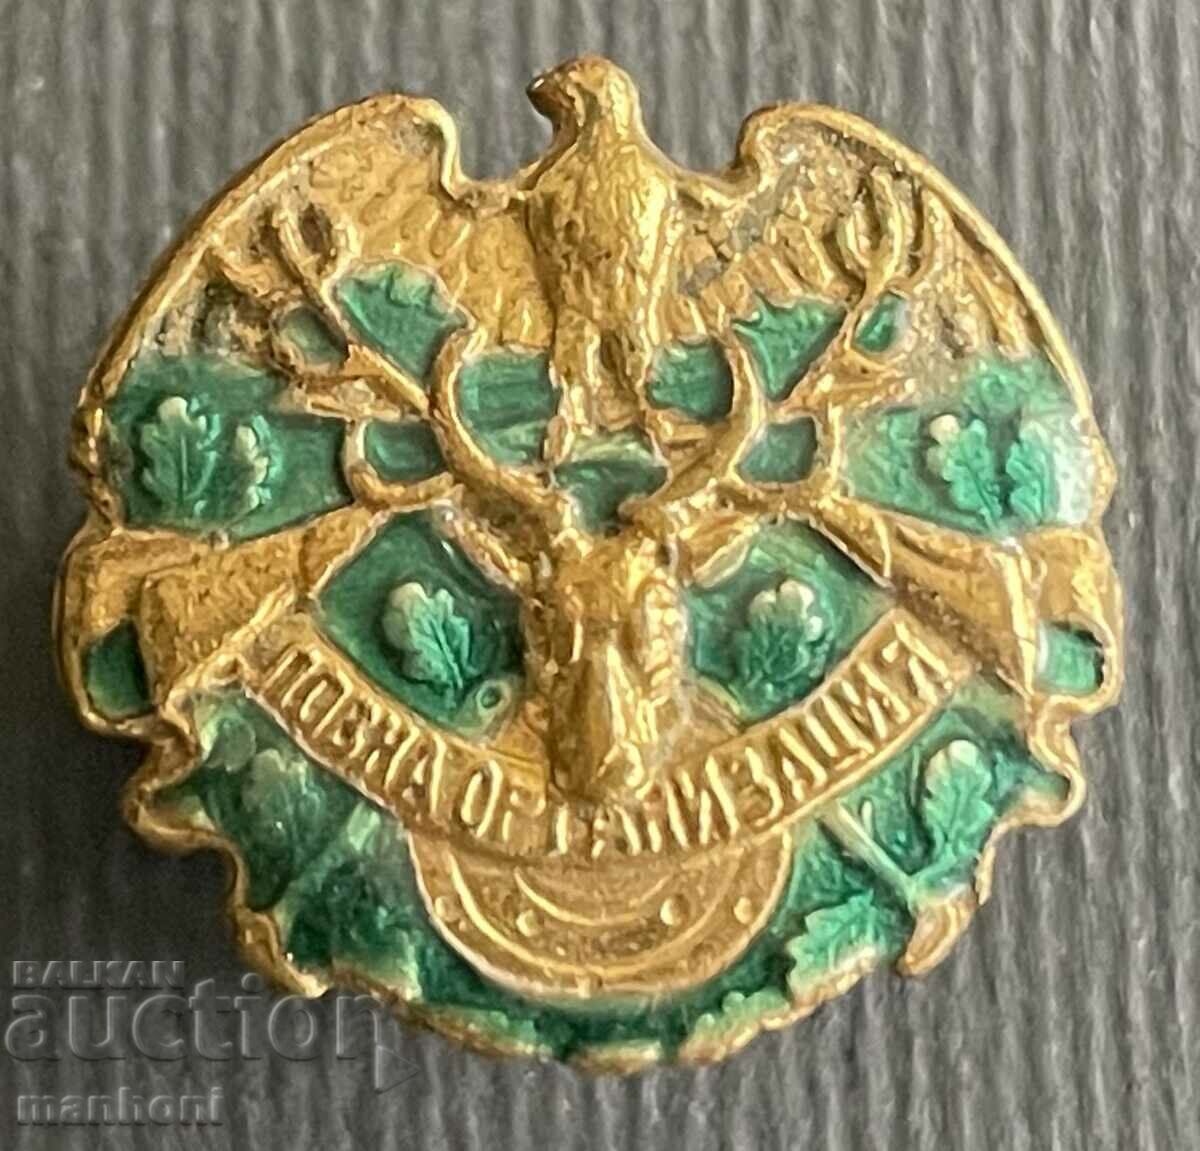 5603 Kingdom of Bulgaria hunting badge membership Hunting Organization